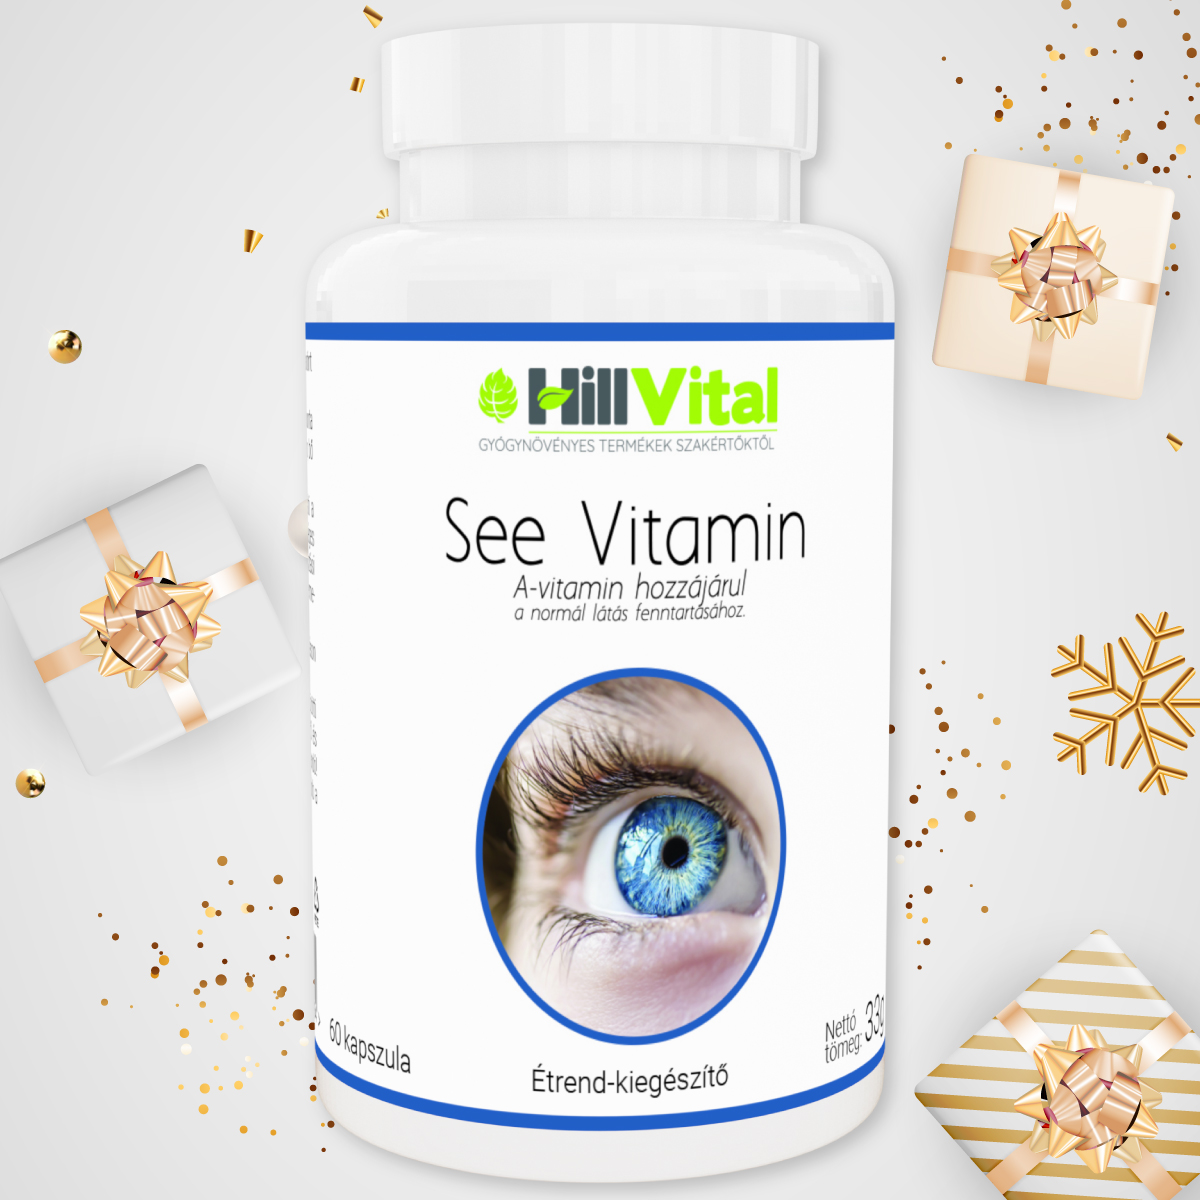 See vitamin